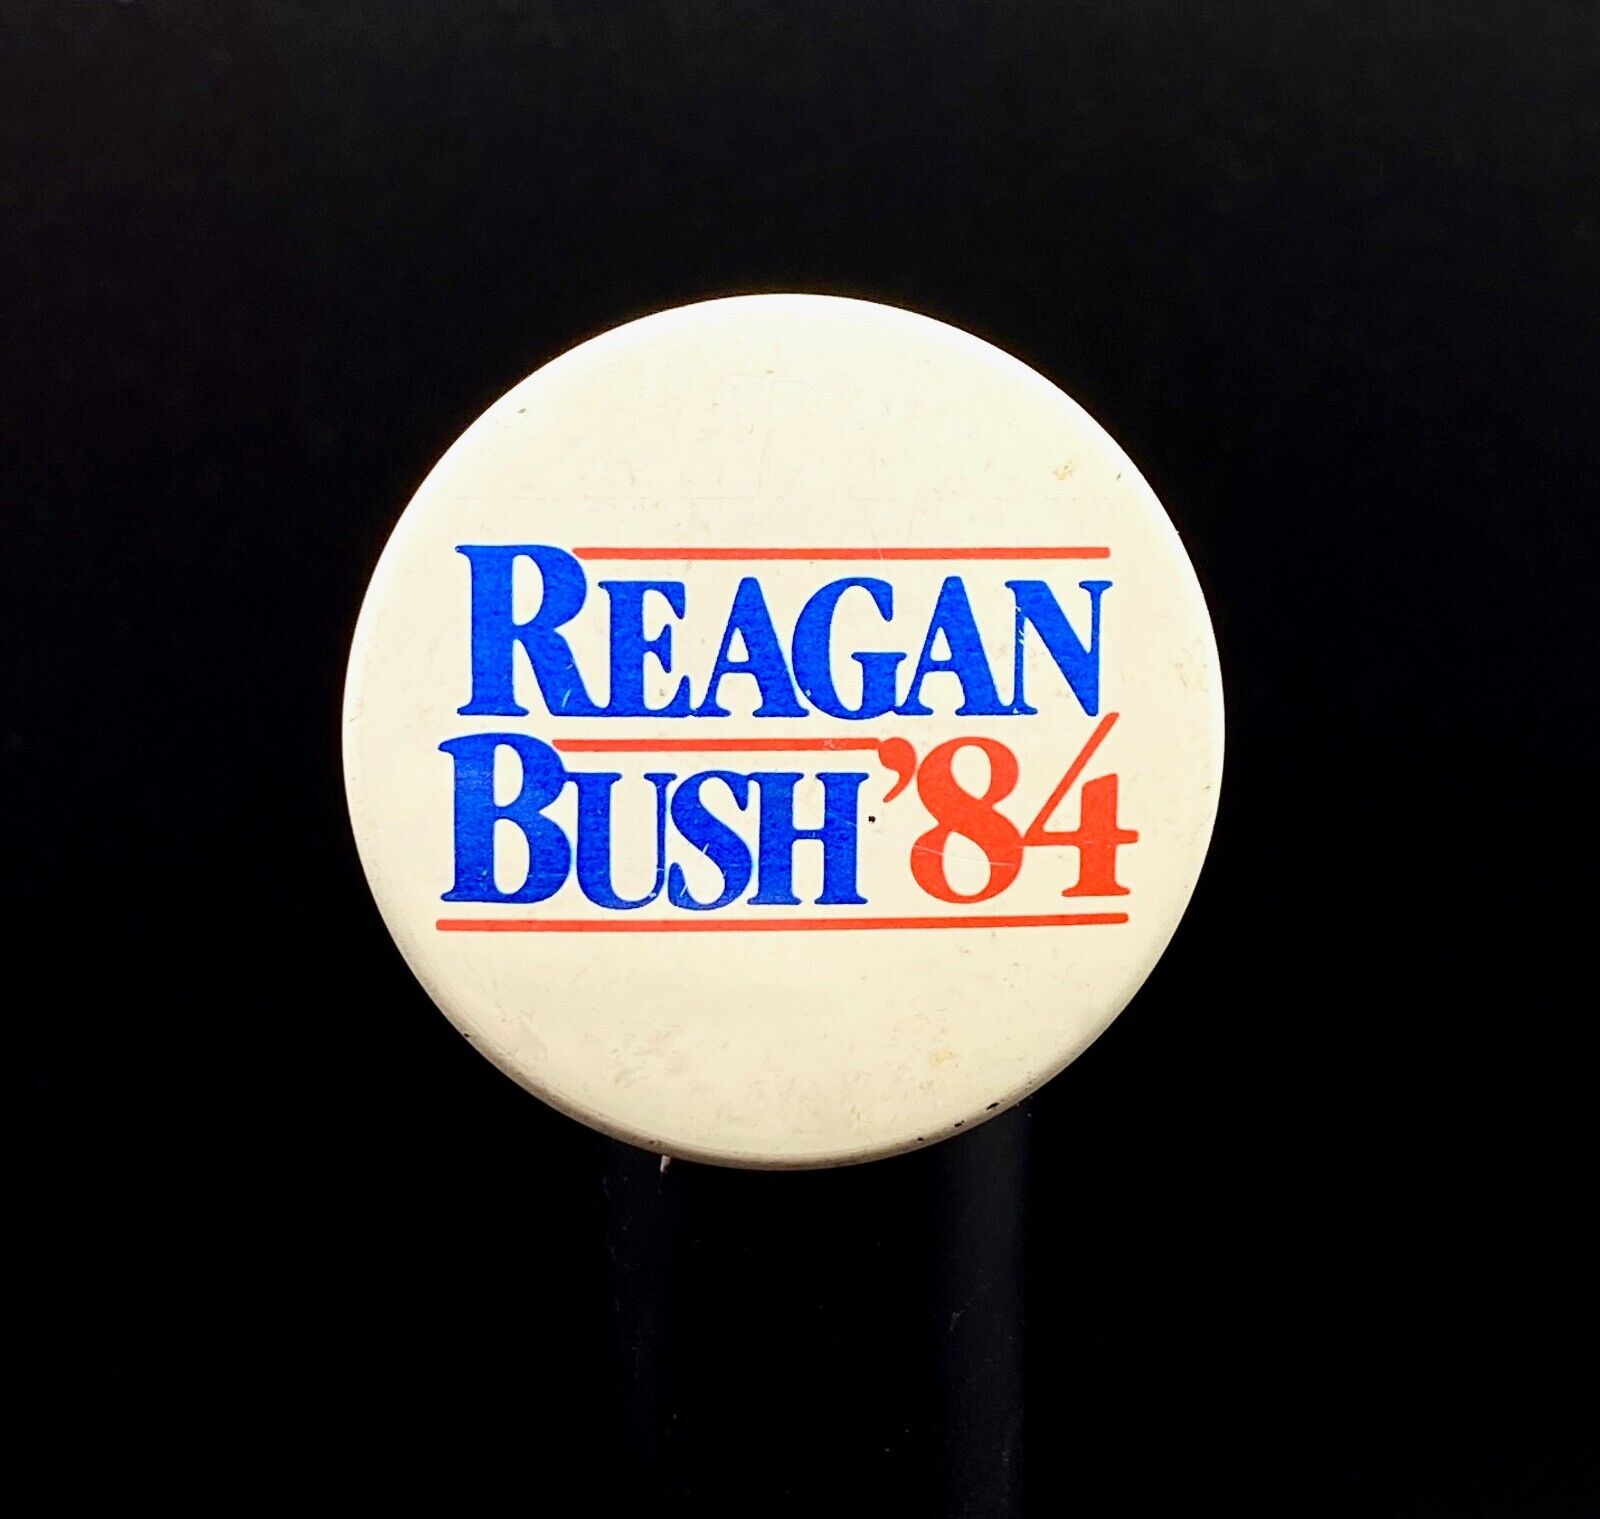 Lot of 7 Vintage Reagan Bush \'84 Campaign Button -1984 Political Pin Back